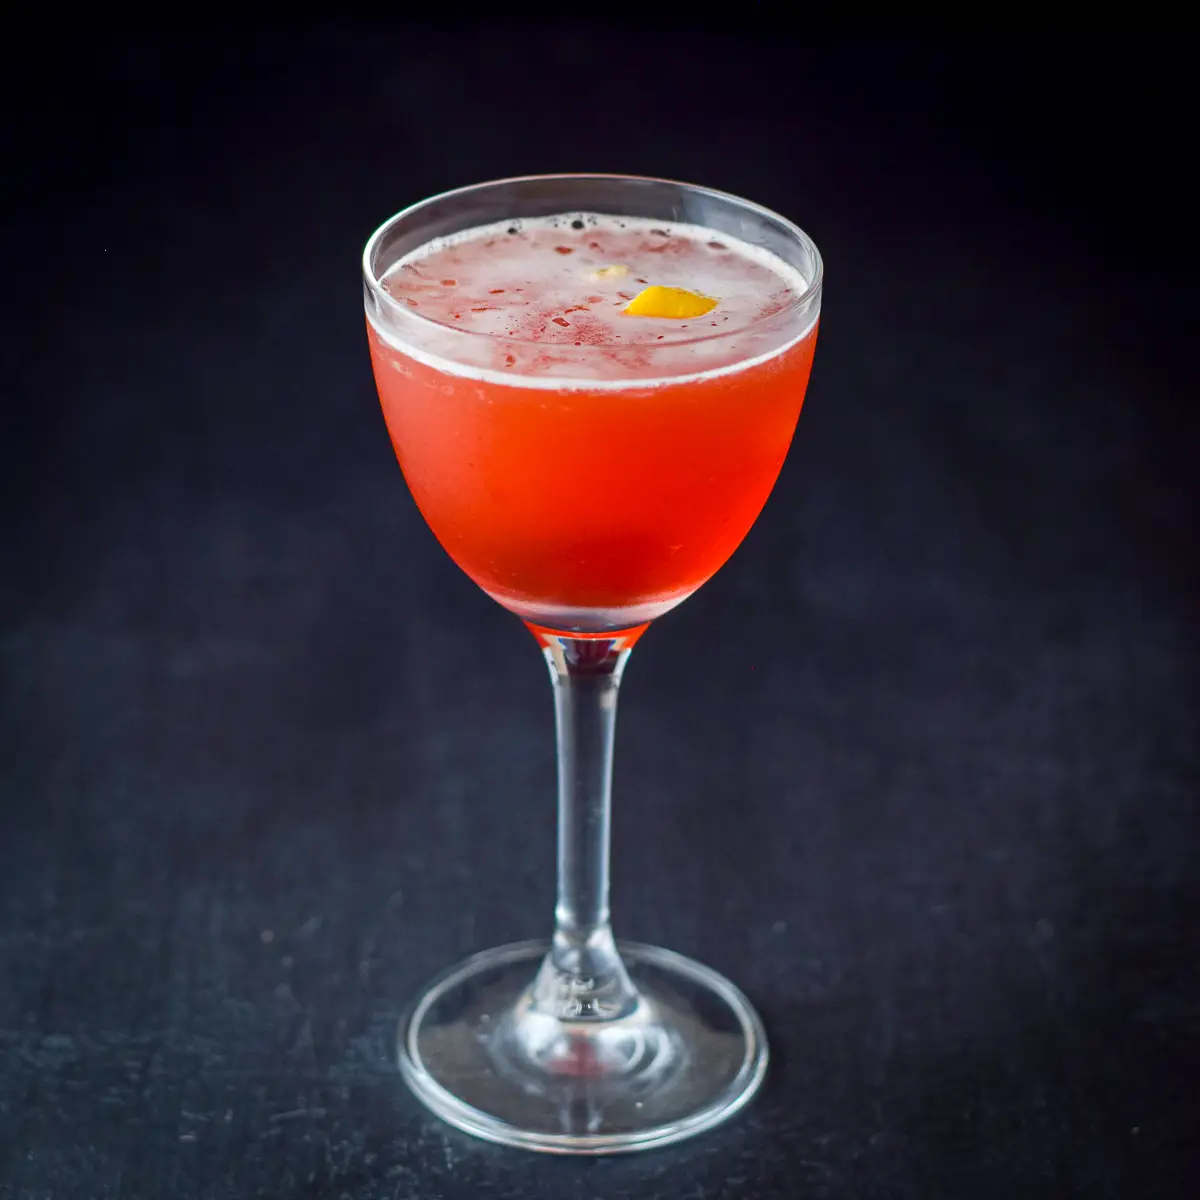 Balanced Boulevardier Cocktail